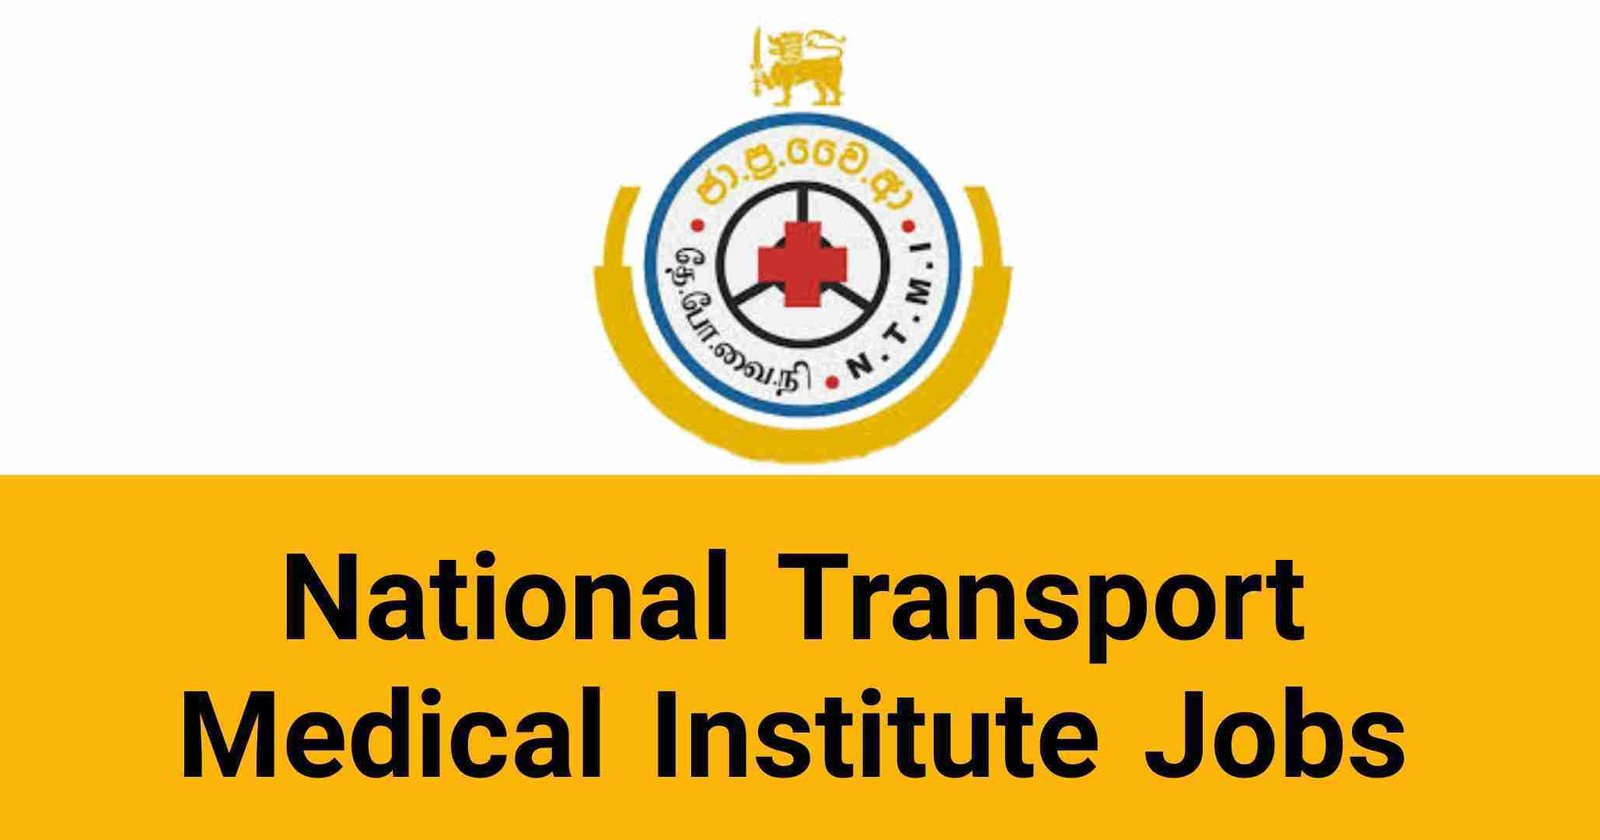 National Transport Medical Institute Jobs Vacancies